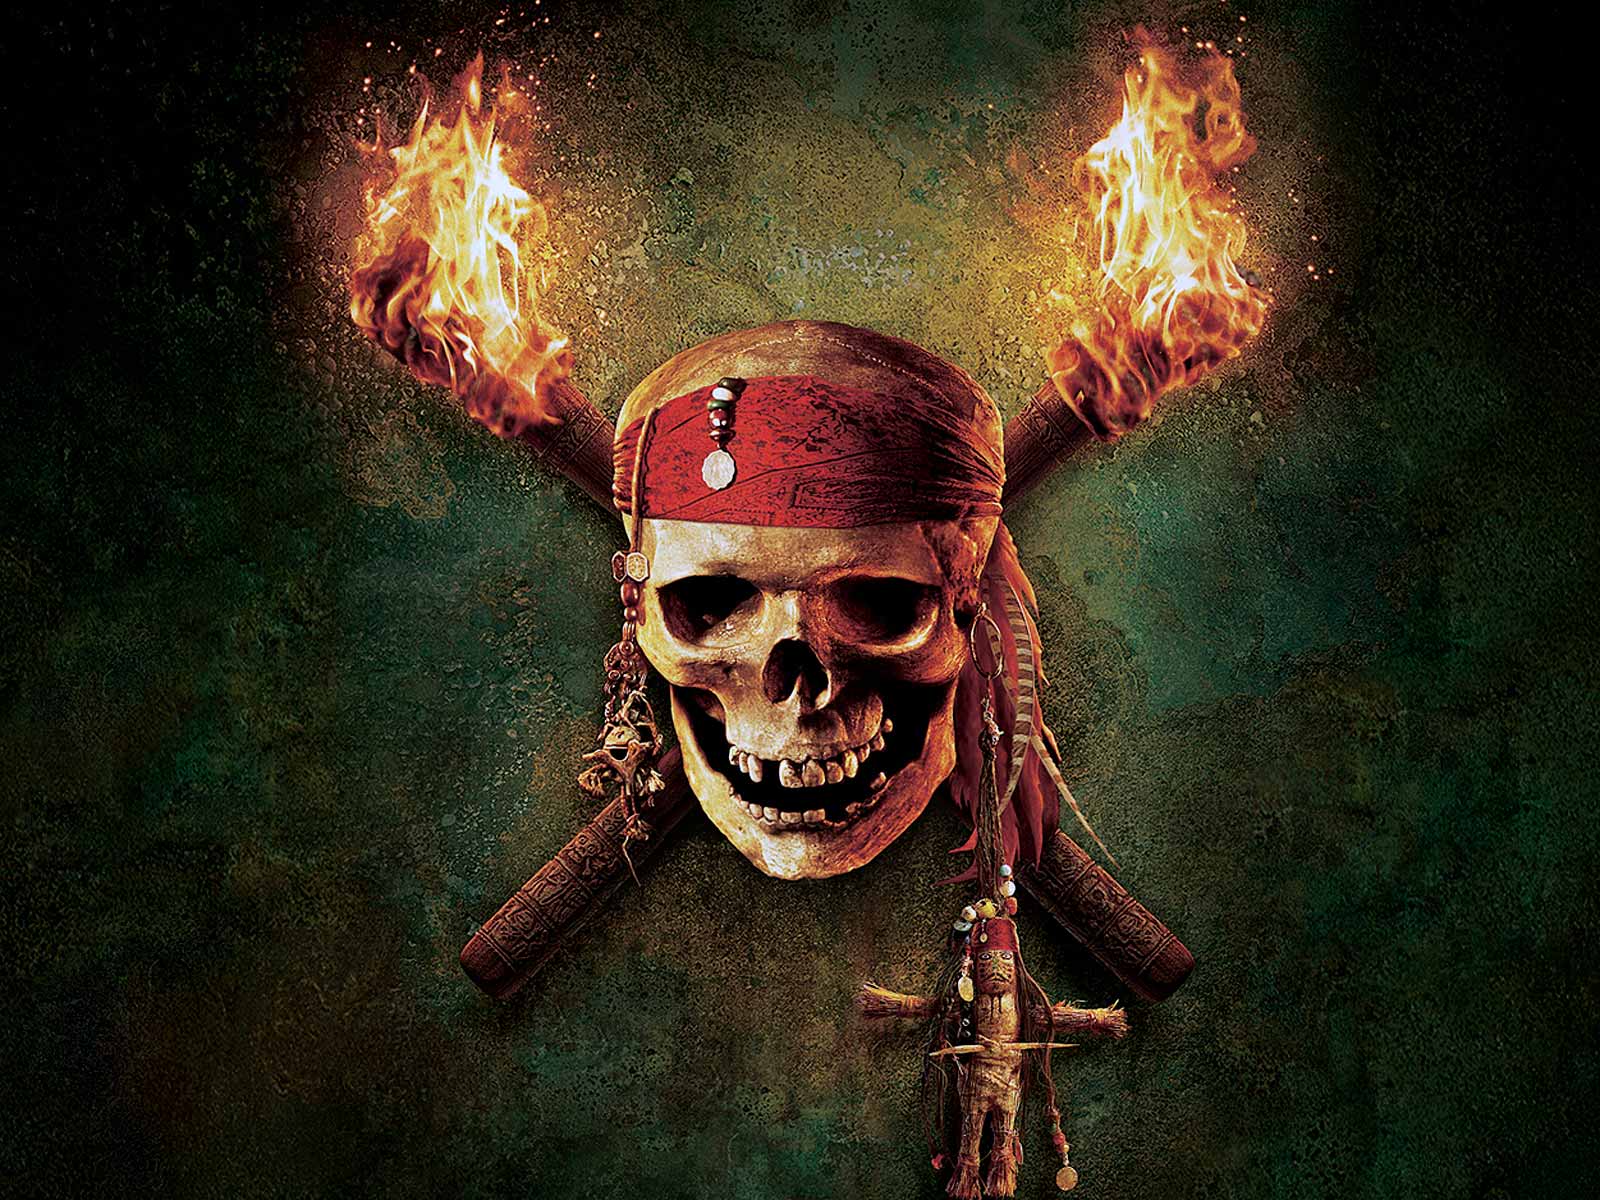  Skull   HD Action Movie Wallpapers   Pirates of Caribbean Skull